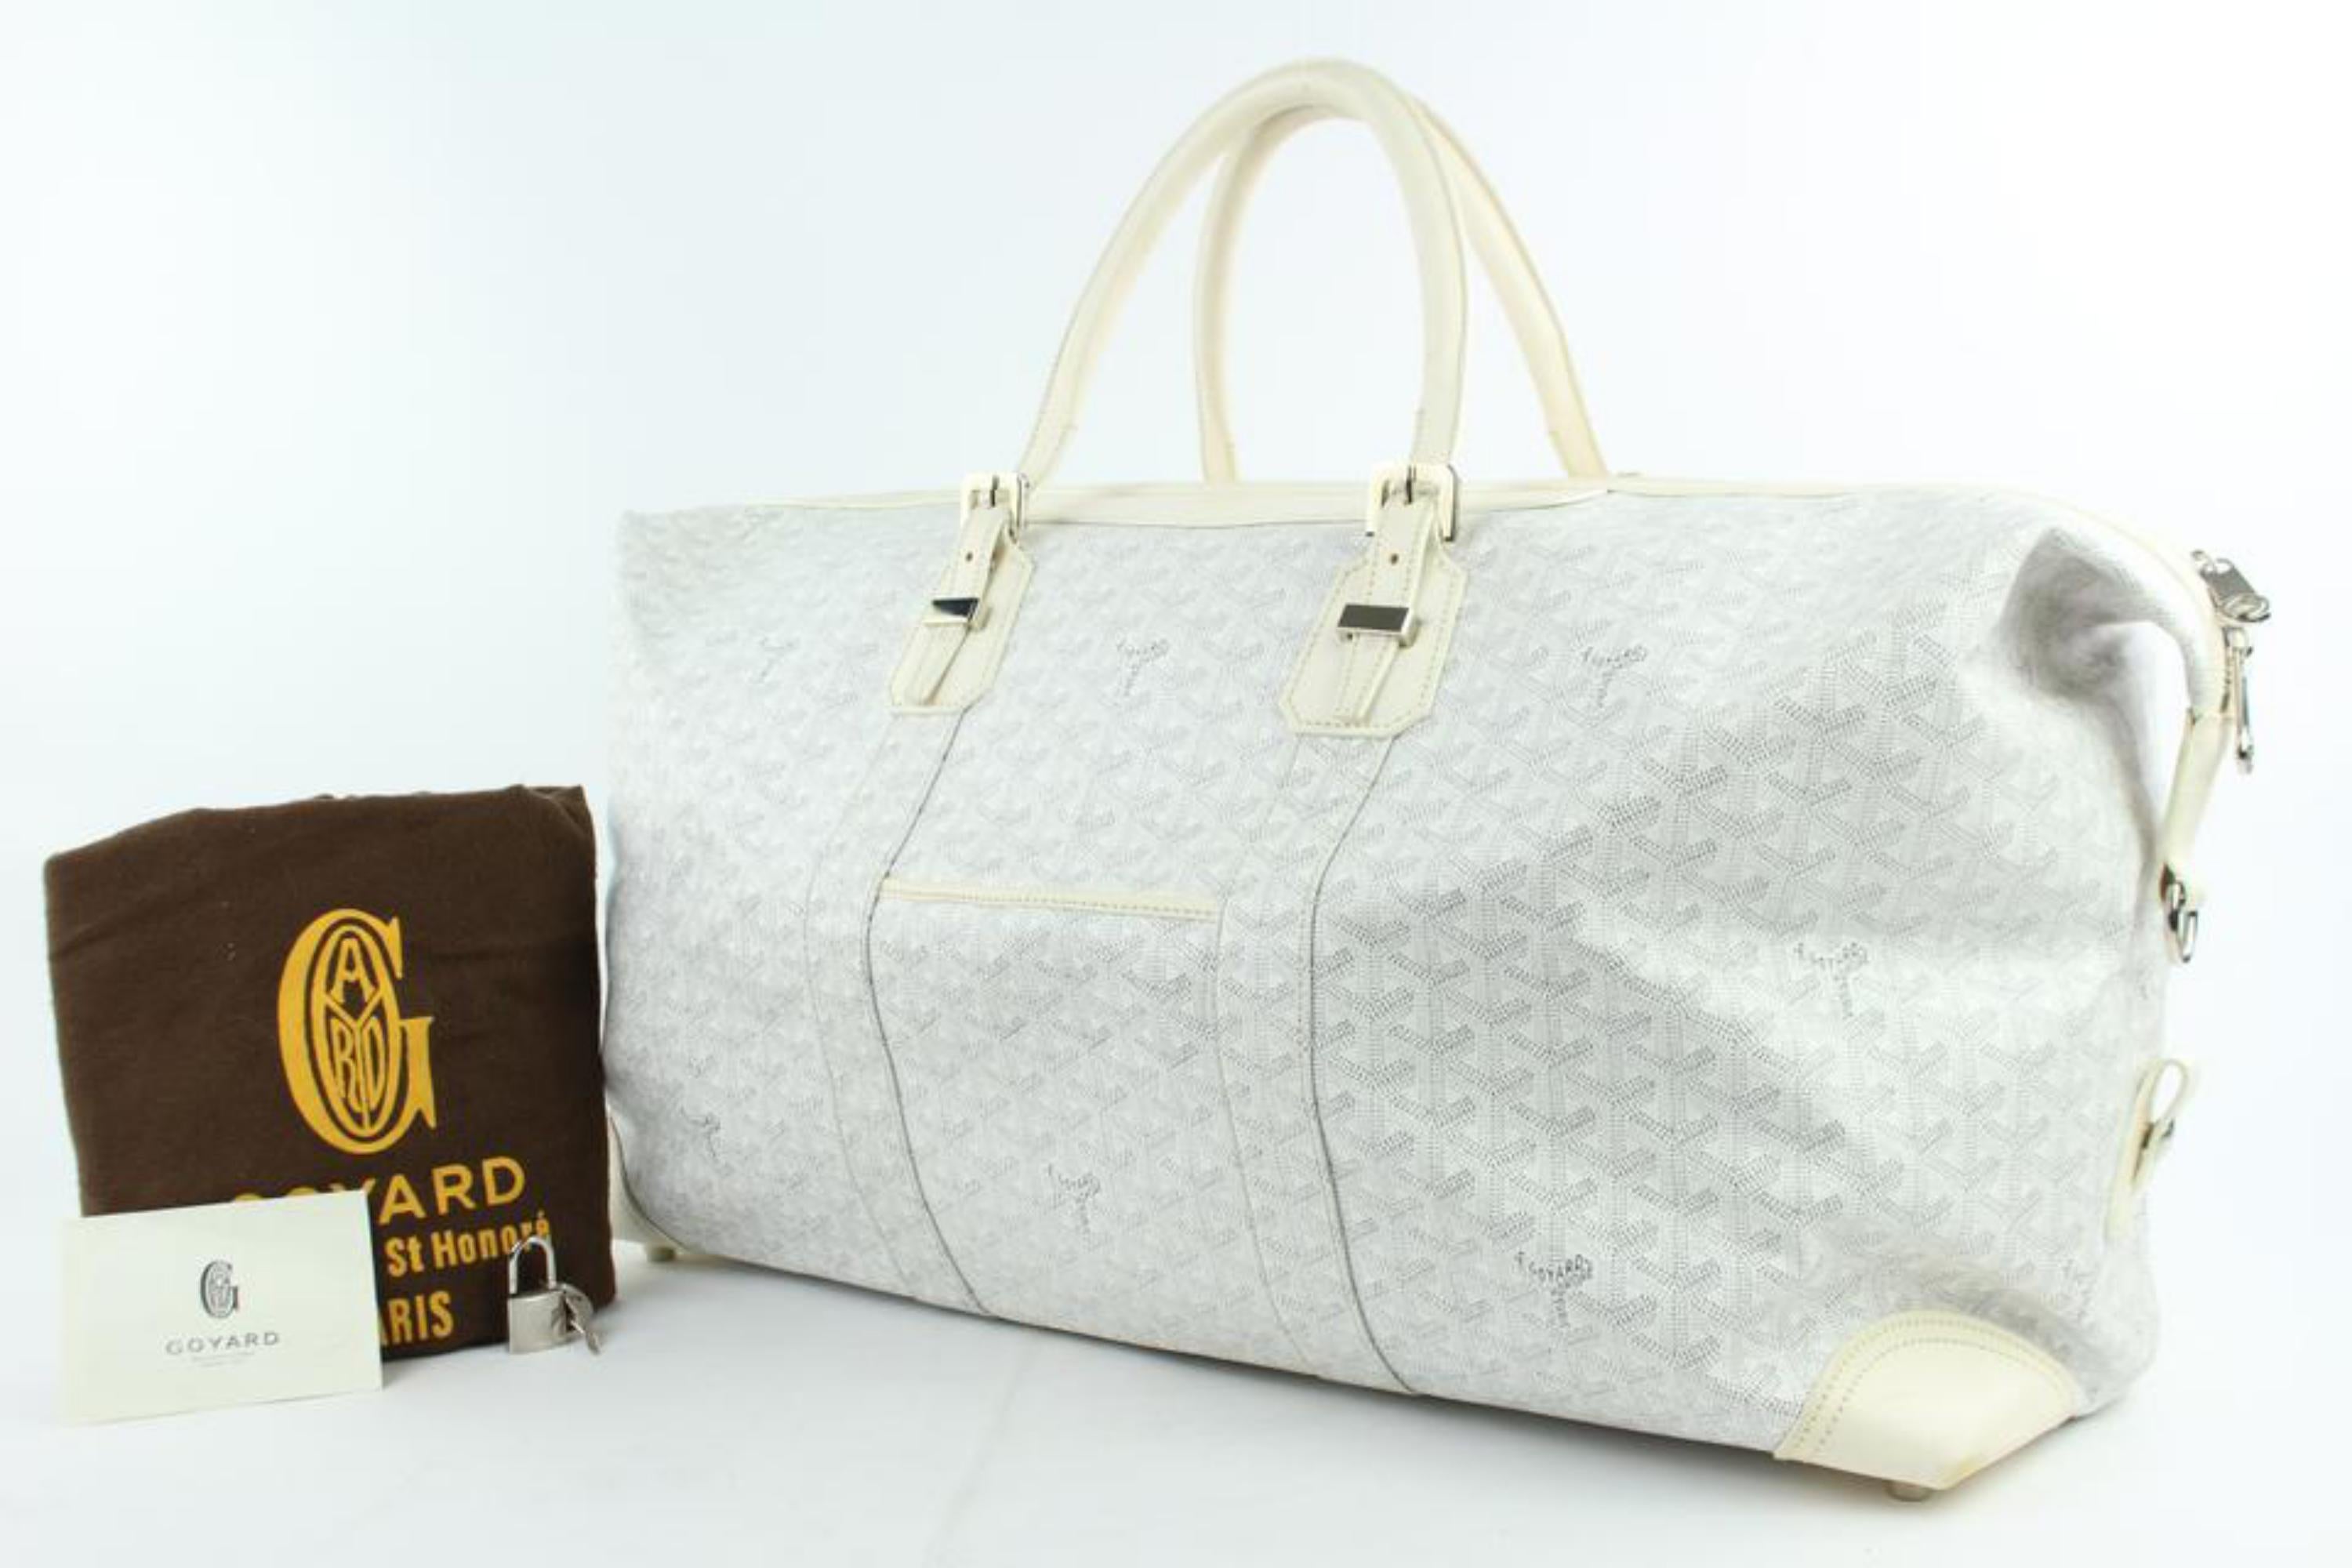 Goyard Luggage White - 2 For Sale on 1stDibs